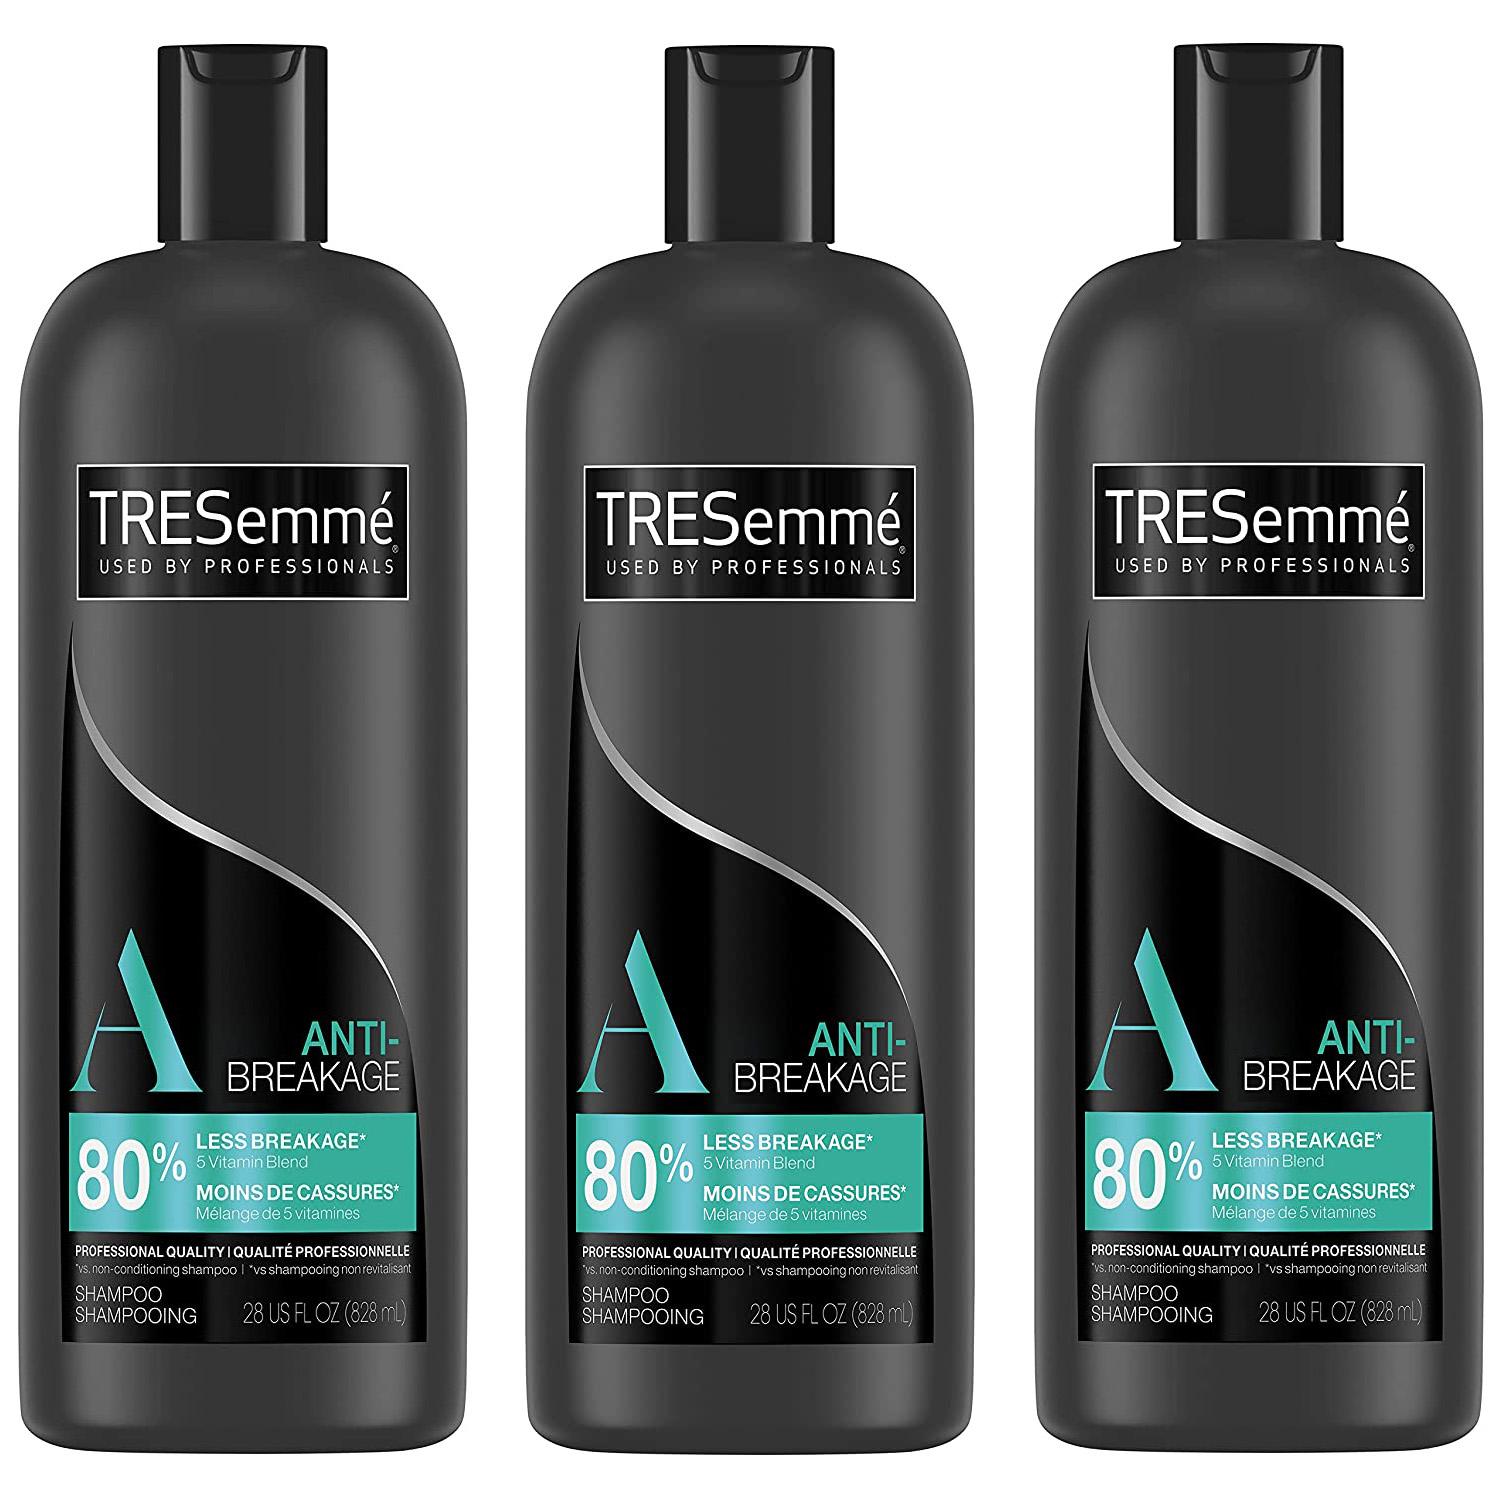 4 TRESemme Anti-Breakage Shampoo for $10.52 Shipped